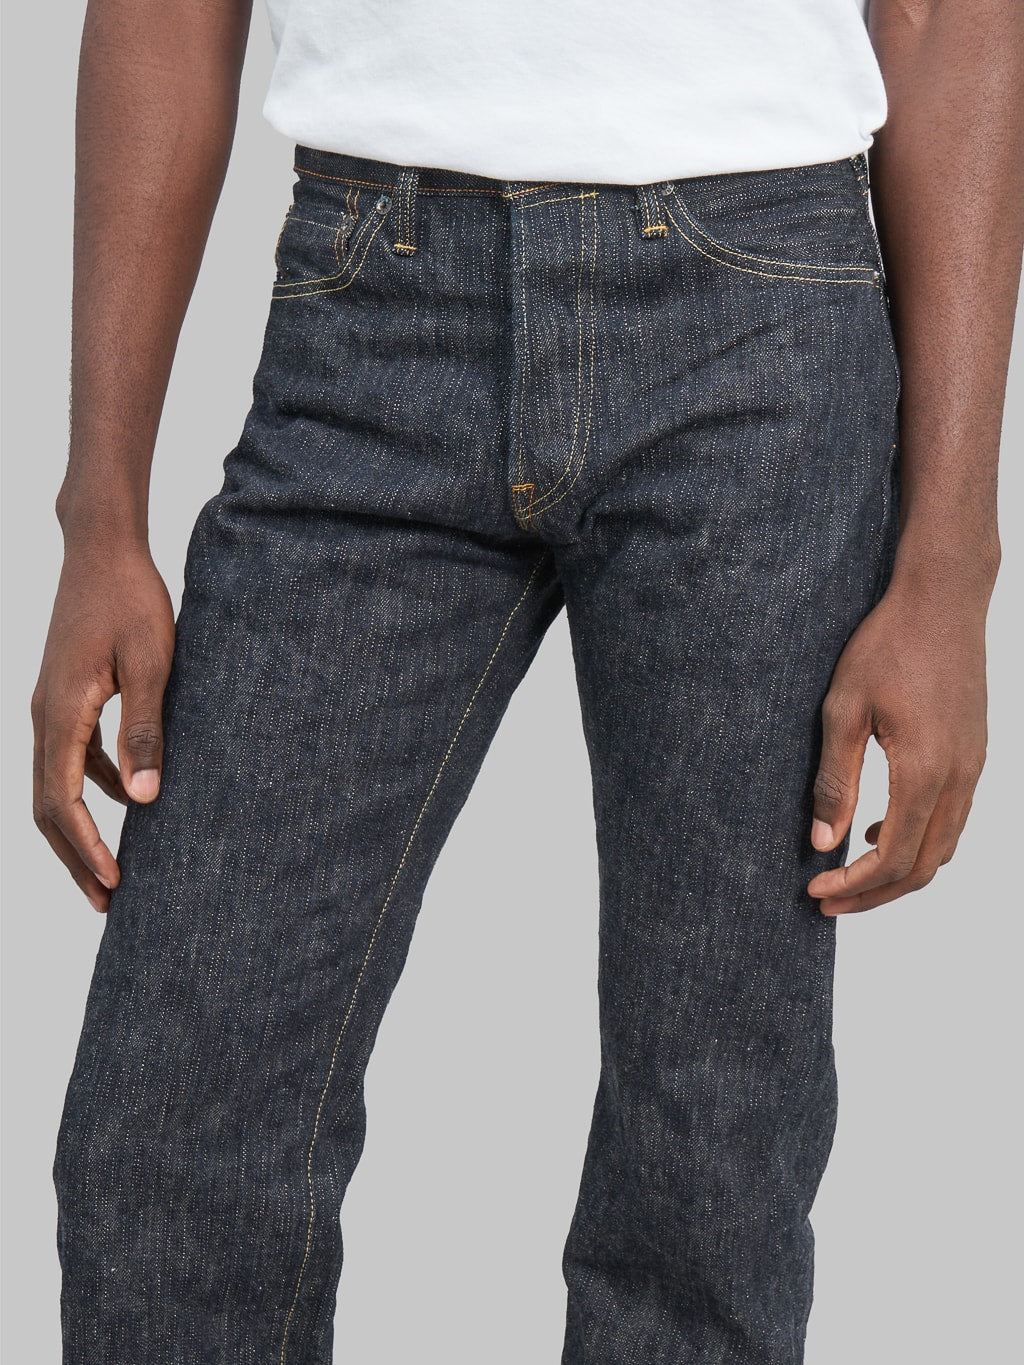 Oni denim kihannen regular straight jeans front rise